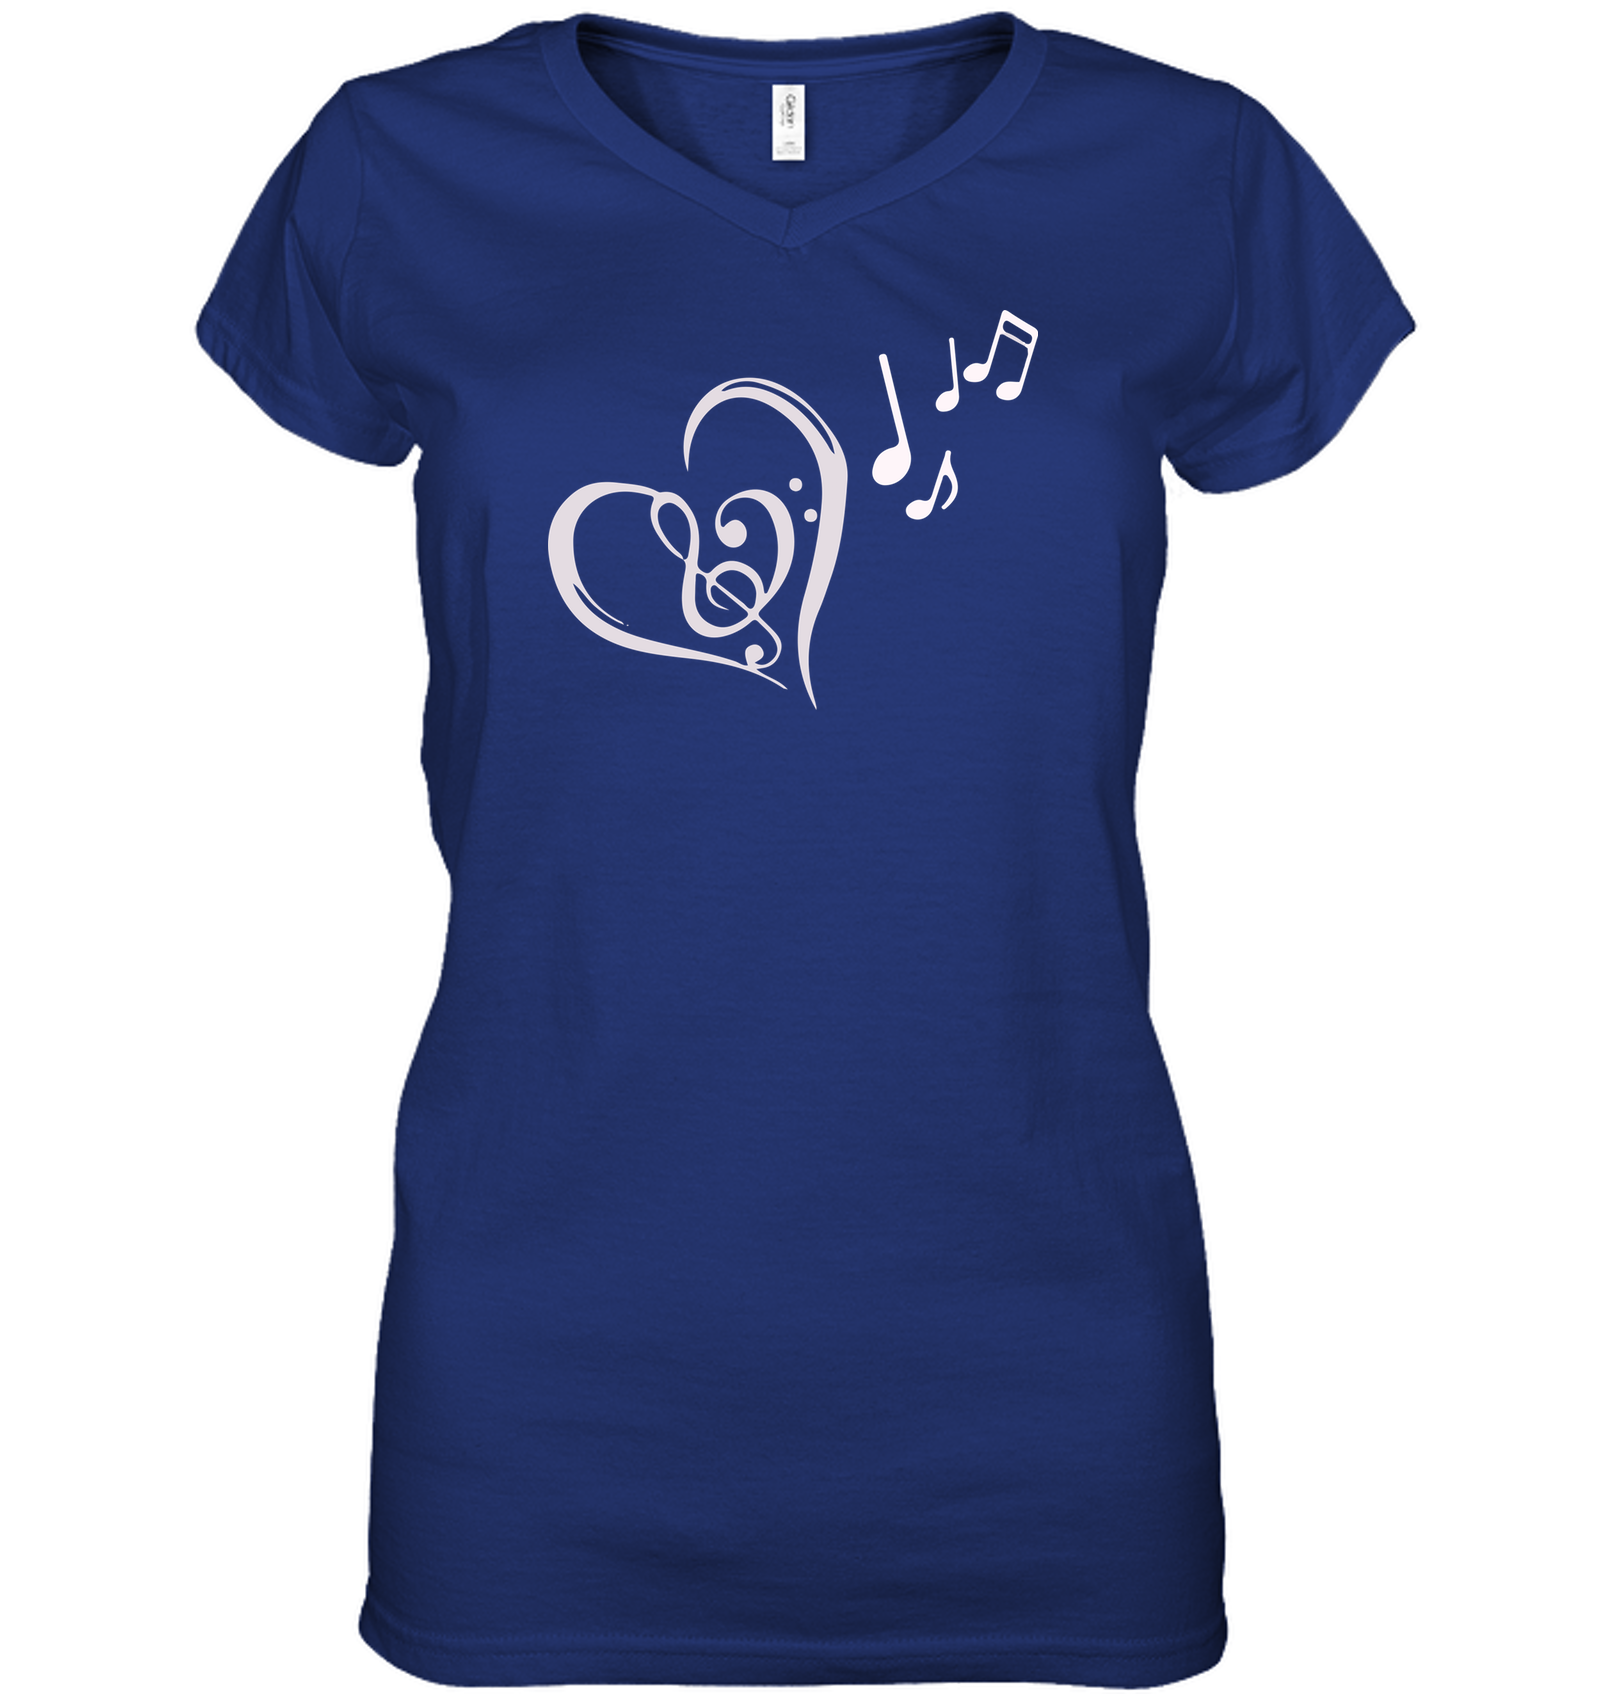 Heart Felt Notes - Hanes Women's Nano-T® V-Neck T-Shirt